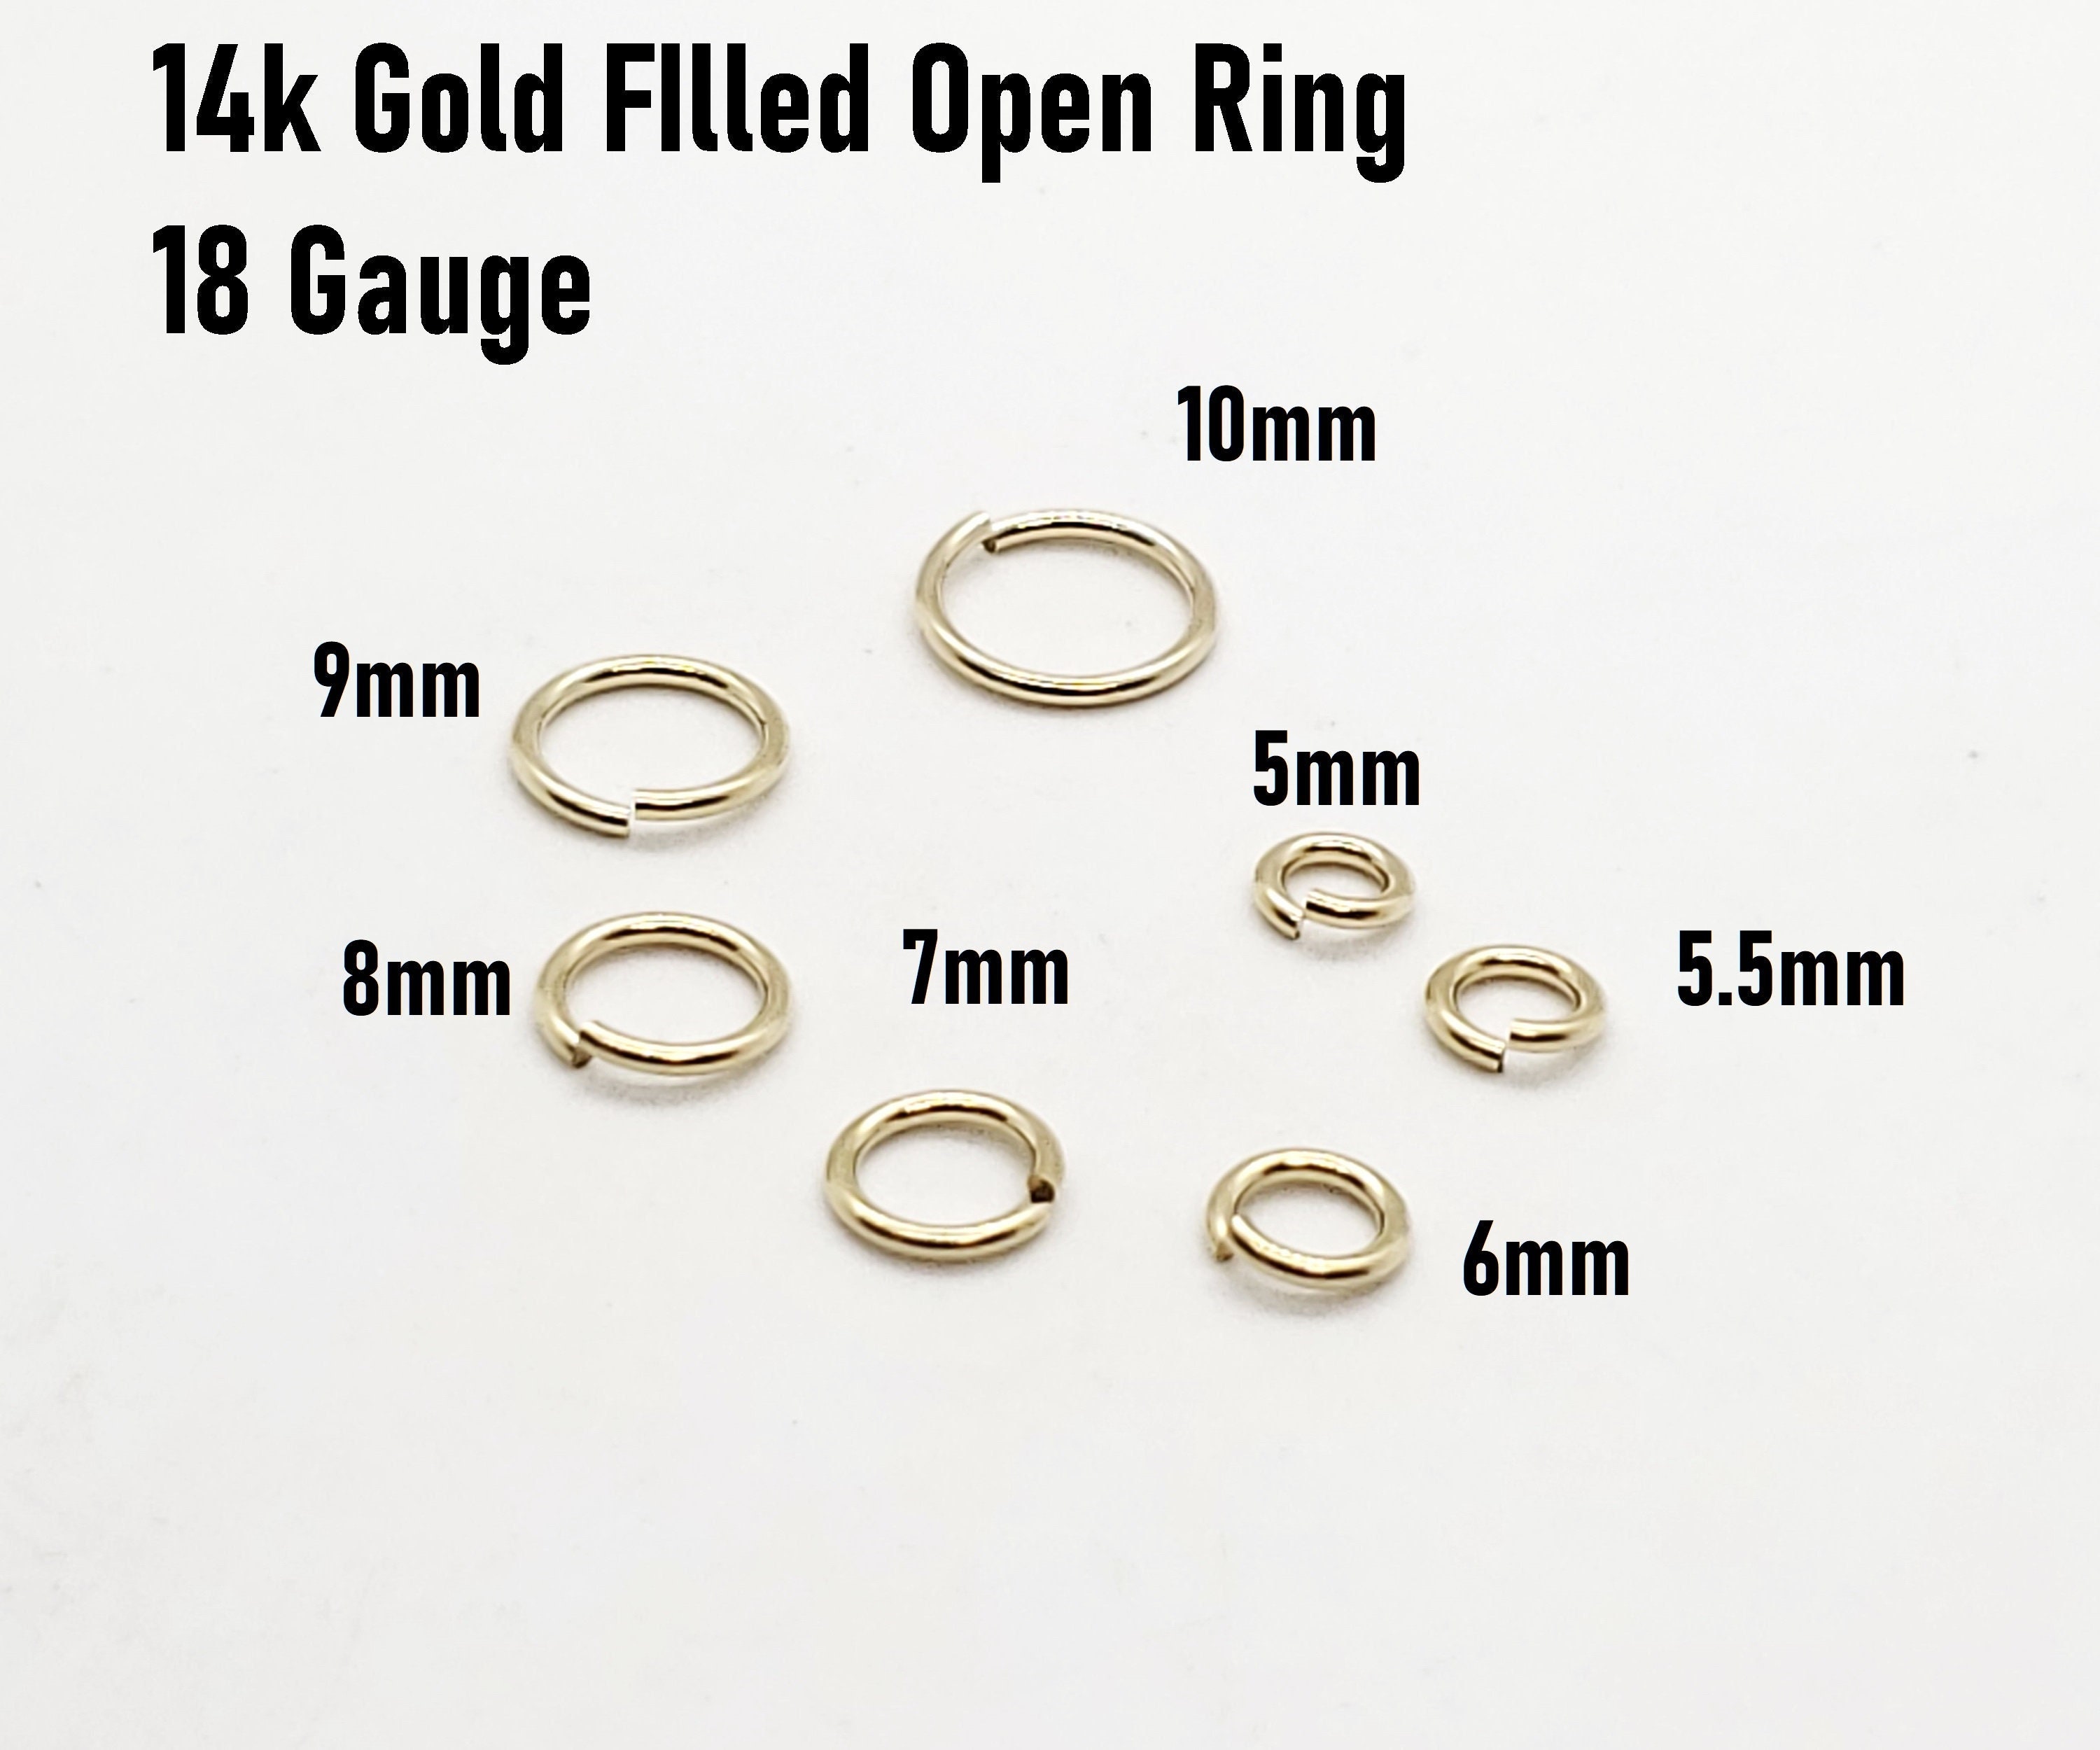 10mm 14 gauge 14k Gold Filled Open Hard Jump rings (10pcs/pk